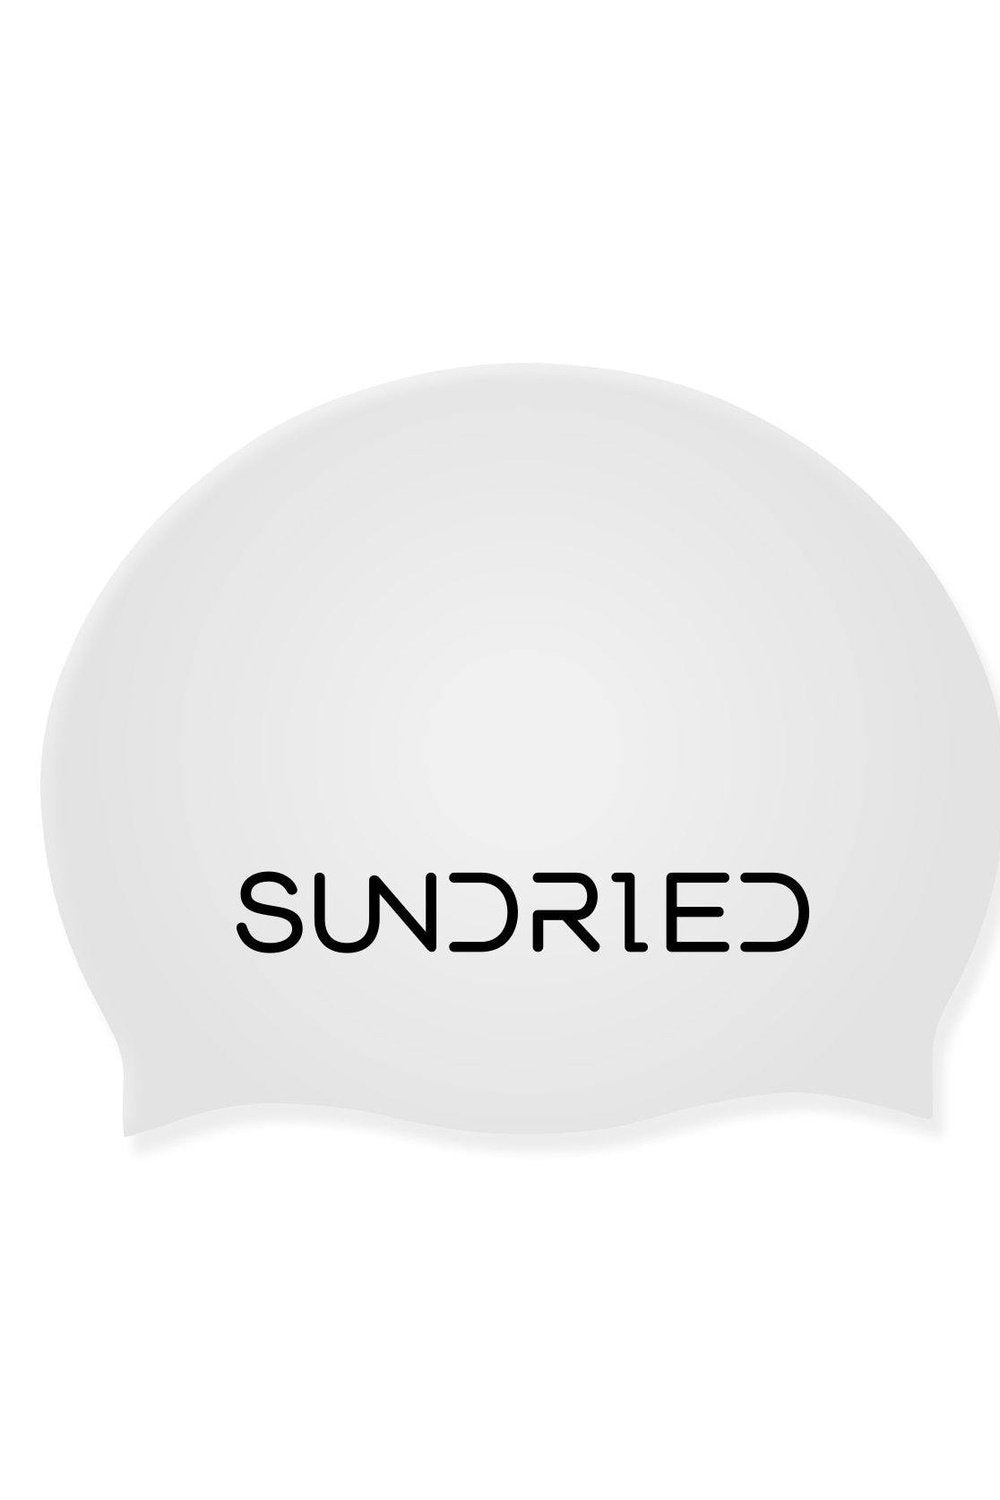 Sundried Swim Hat Swimming Accessories White SD0111 White Activewear